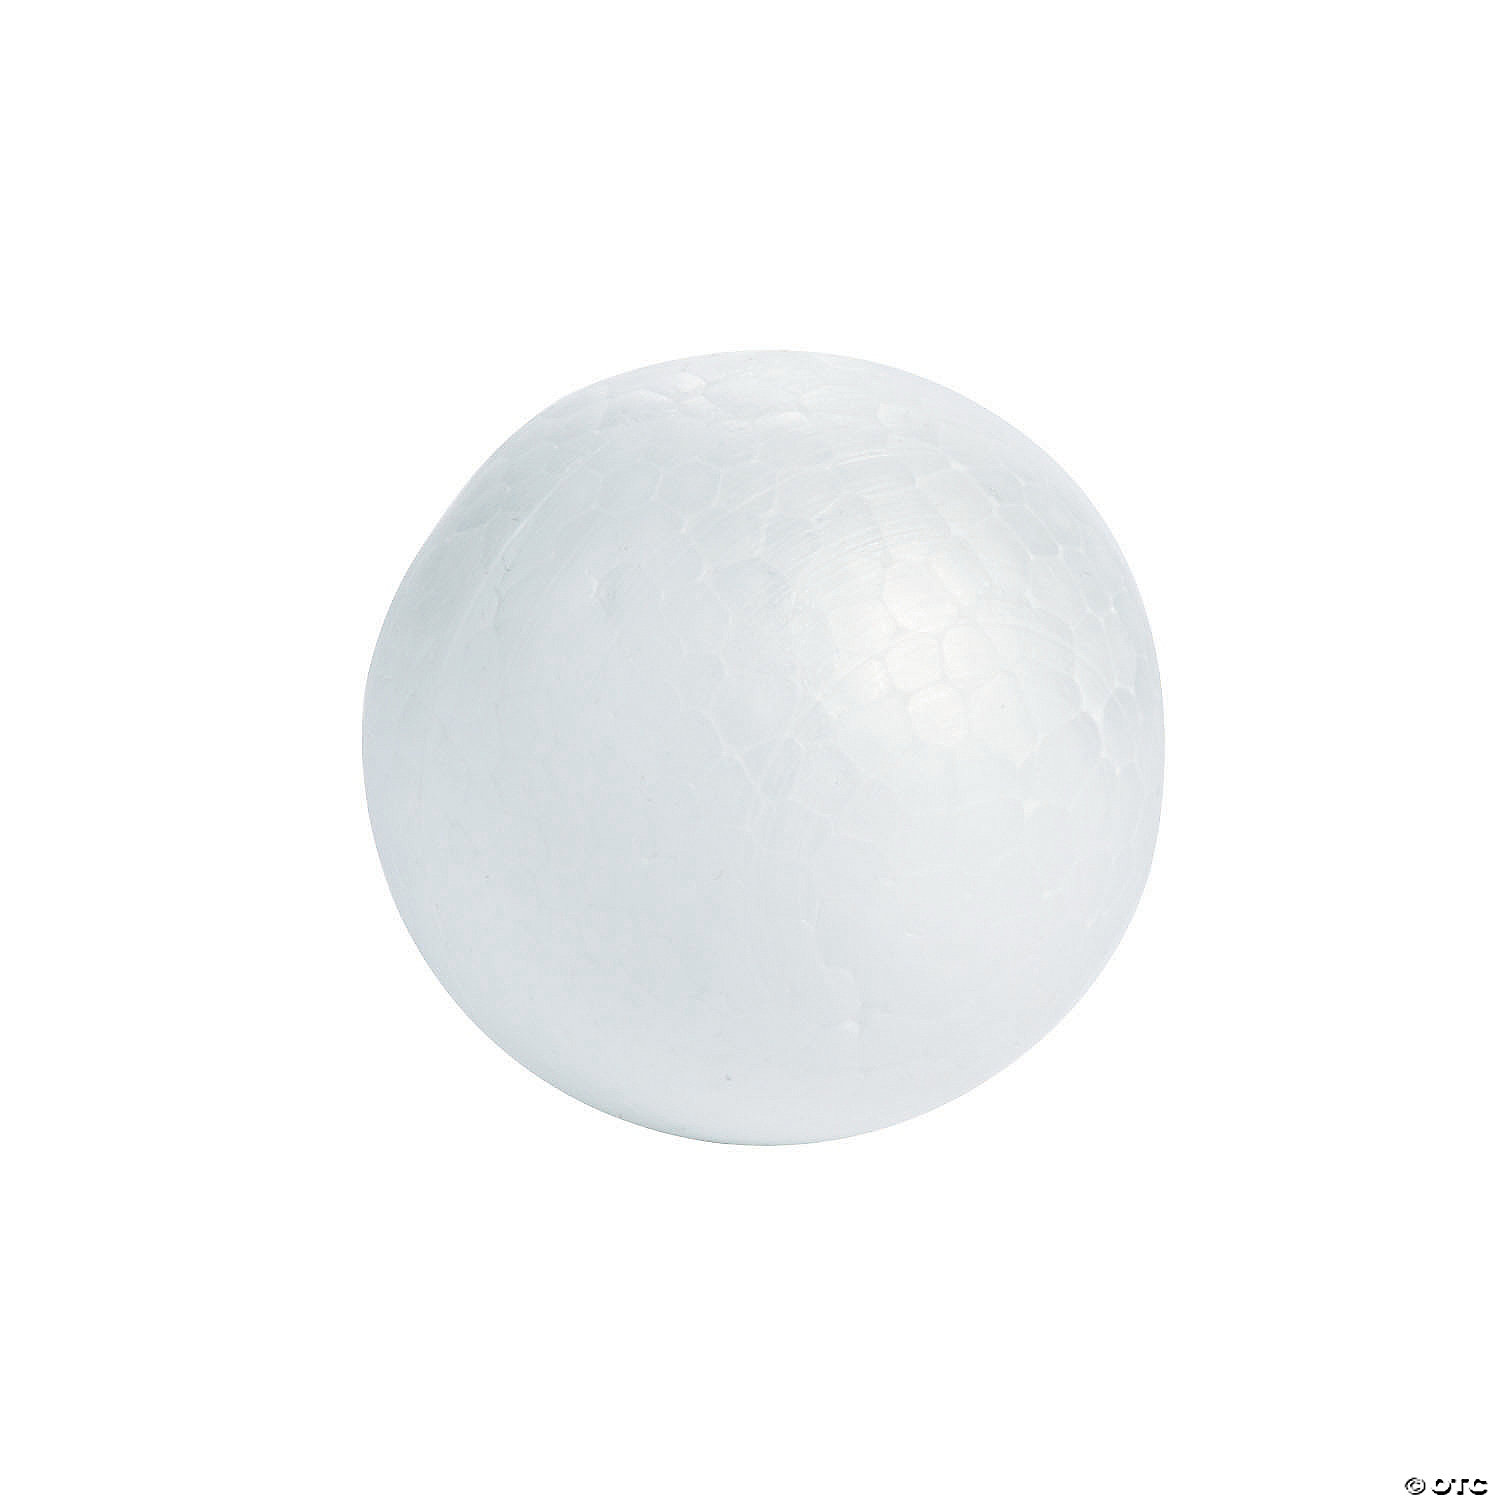 Qingsun Styrofoam Balls 0.1-0.16 Inch Mini Foam Balls School Arts DIY Crafting Projects Supplies For Stick to Slime 13000 Pcs Blue 